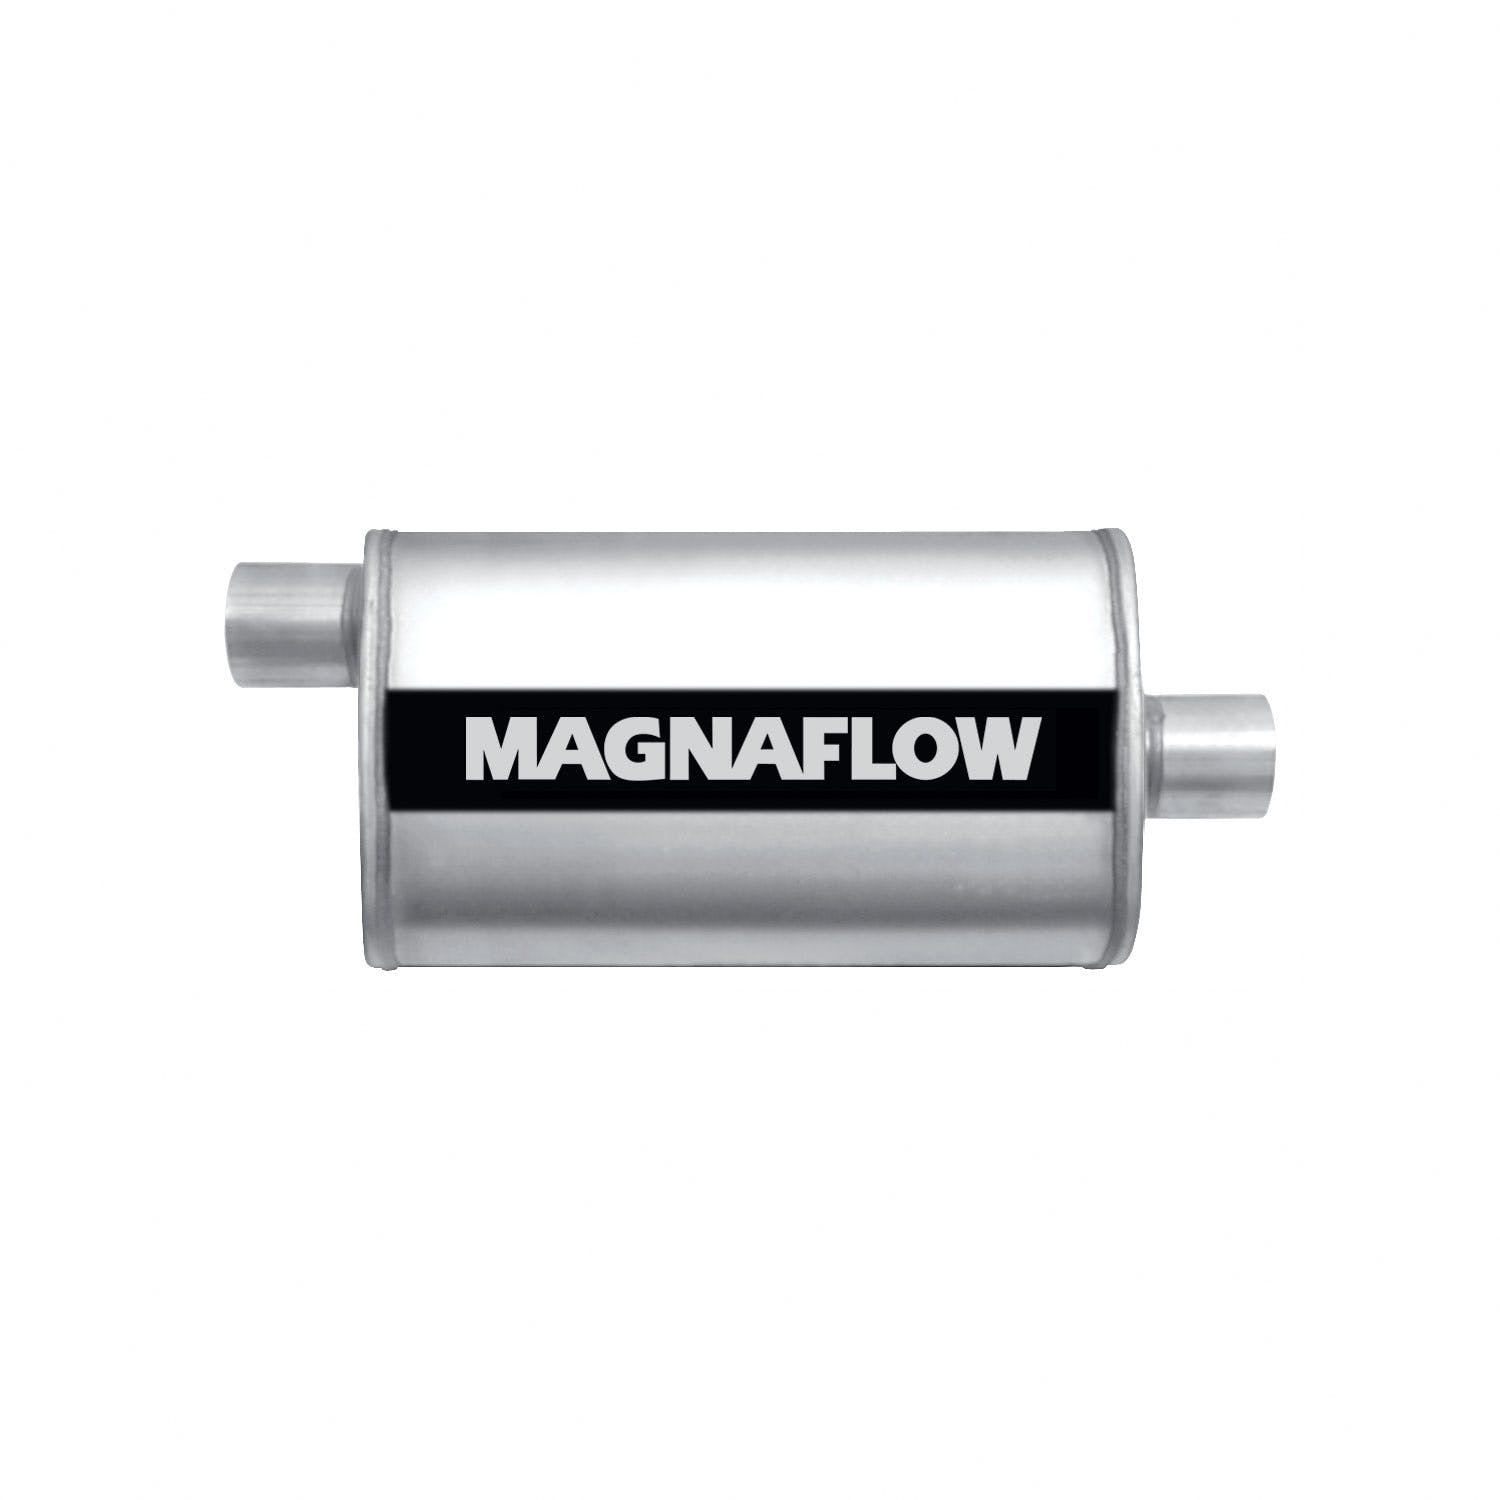 MagnaFlow Exhaust Products 11226 Universal Muffler